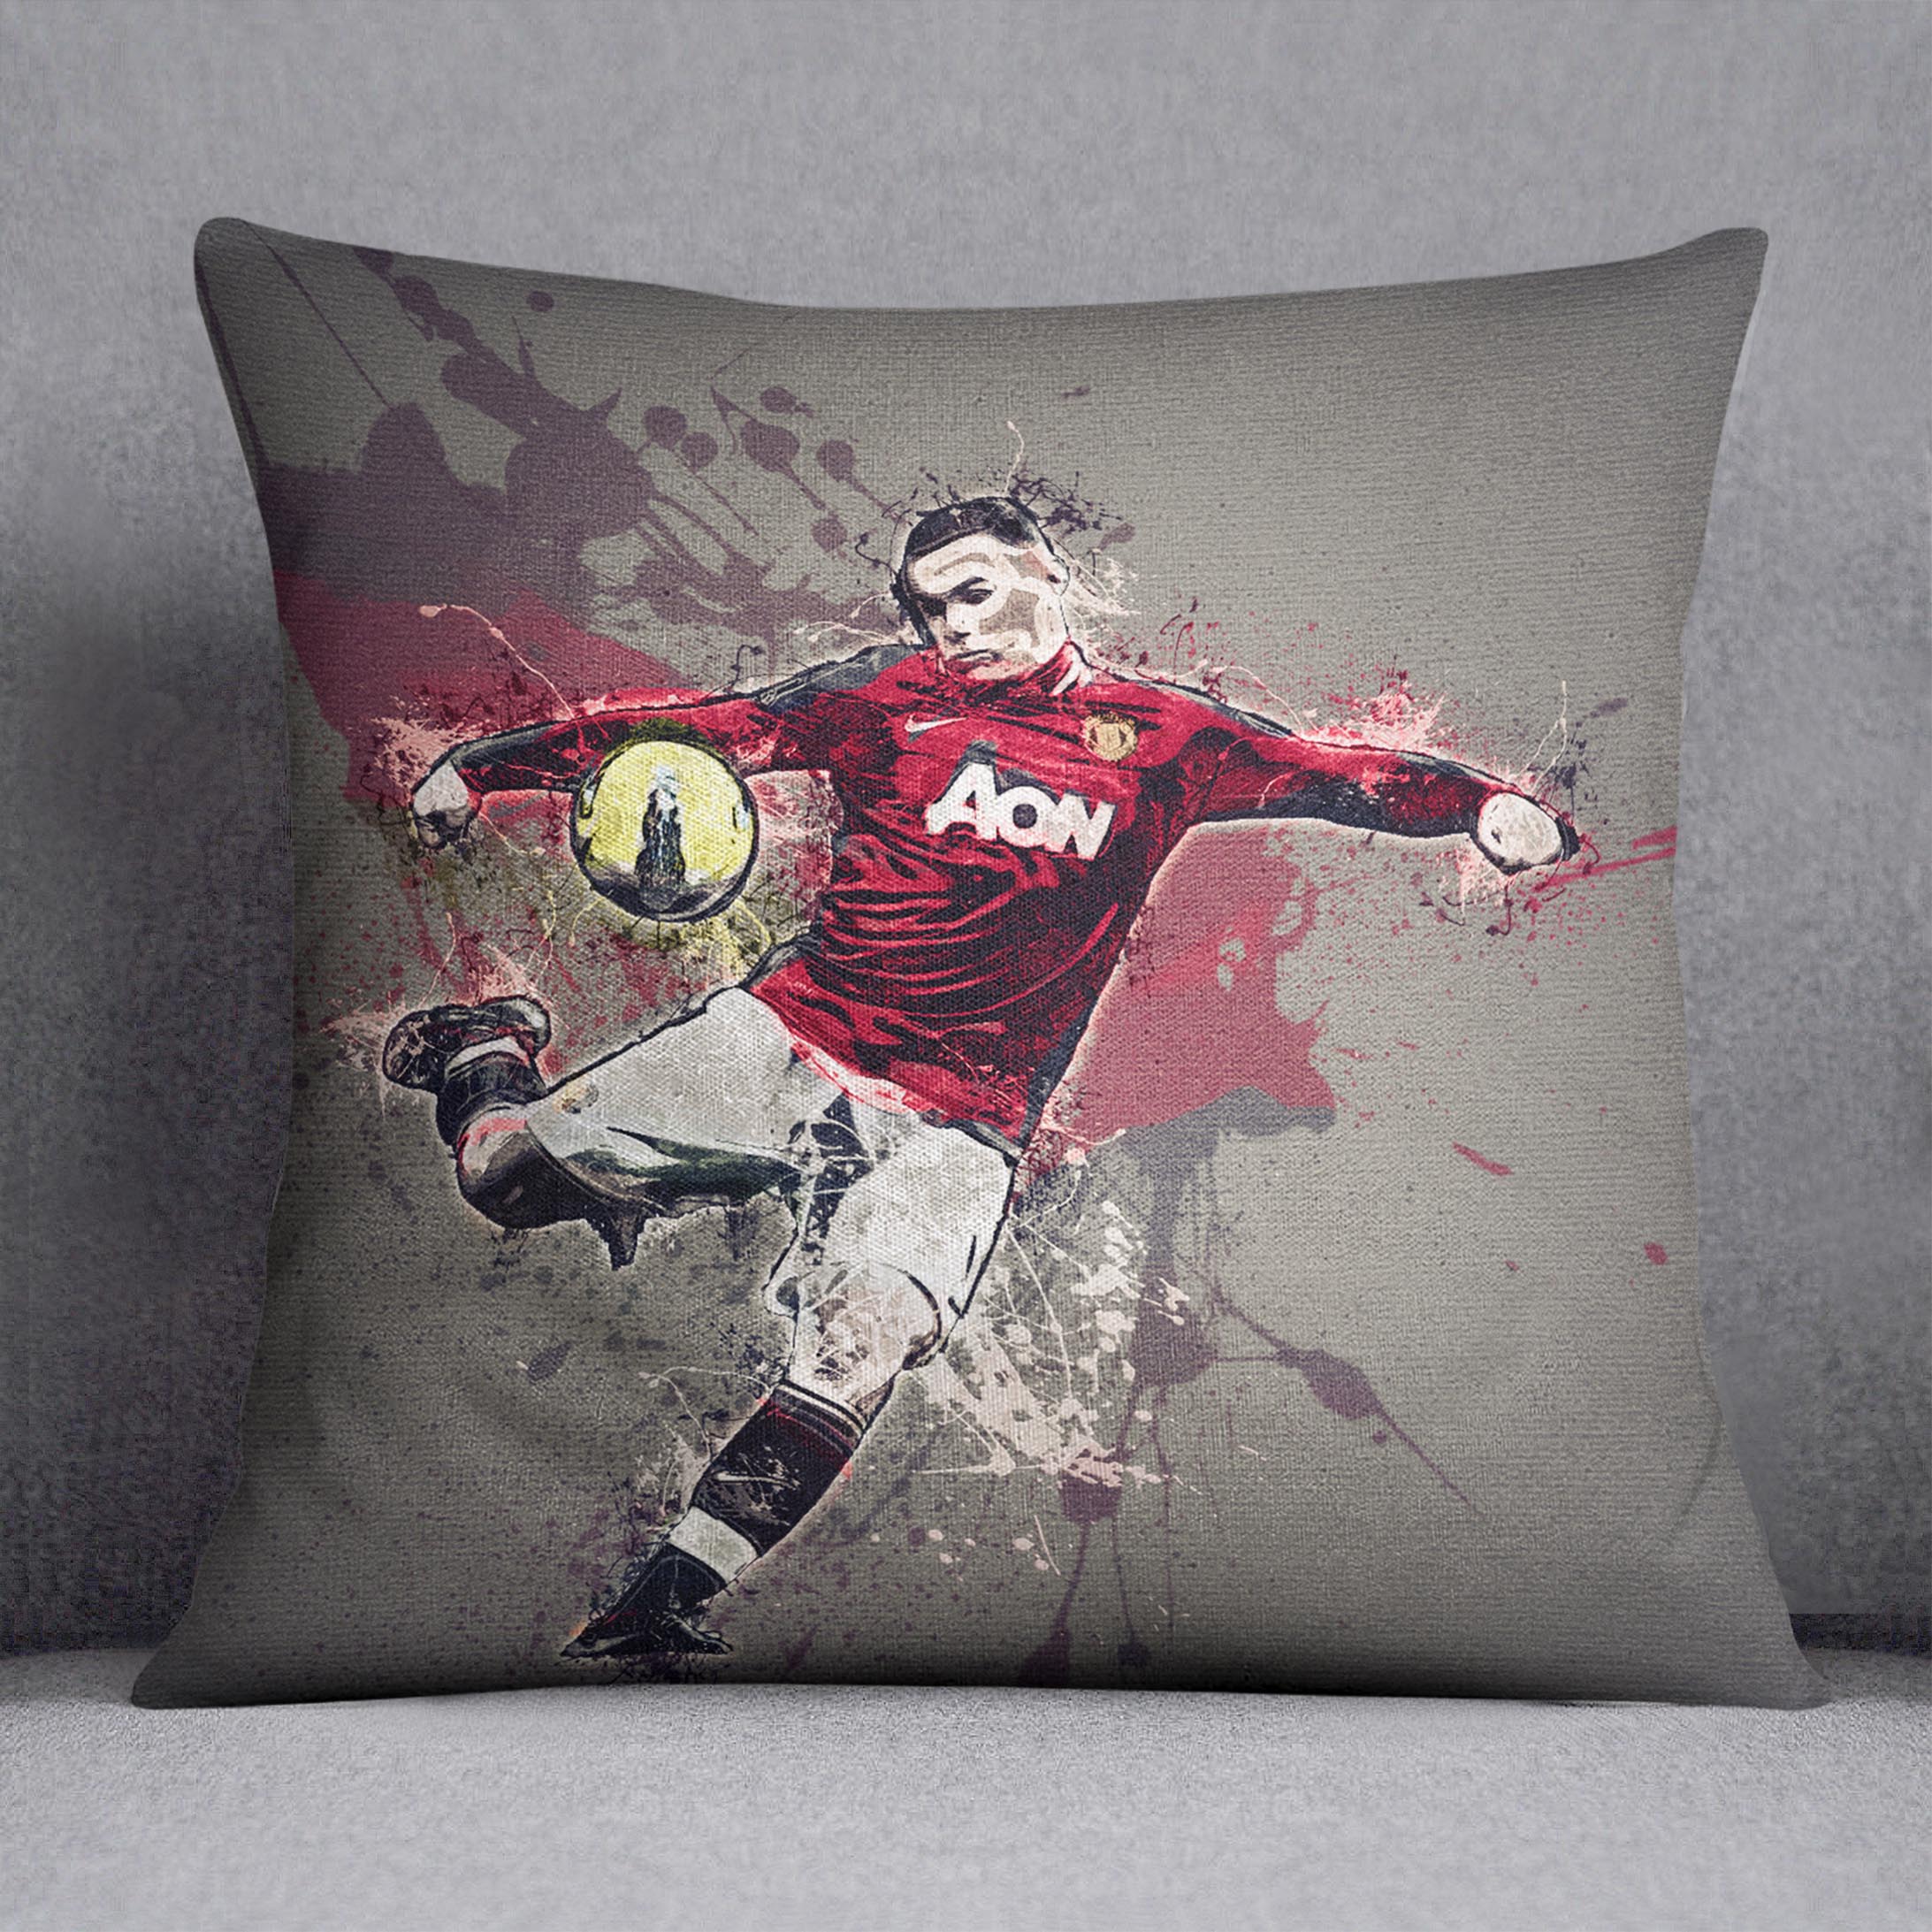 Wayne Rooney Paint Splatter Cushion